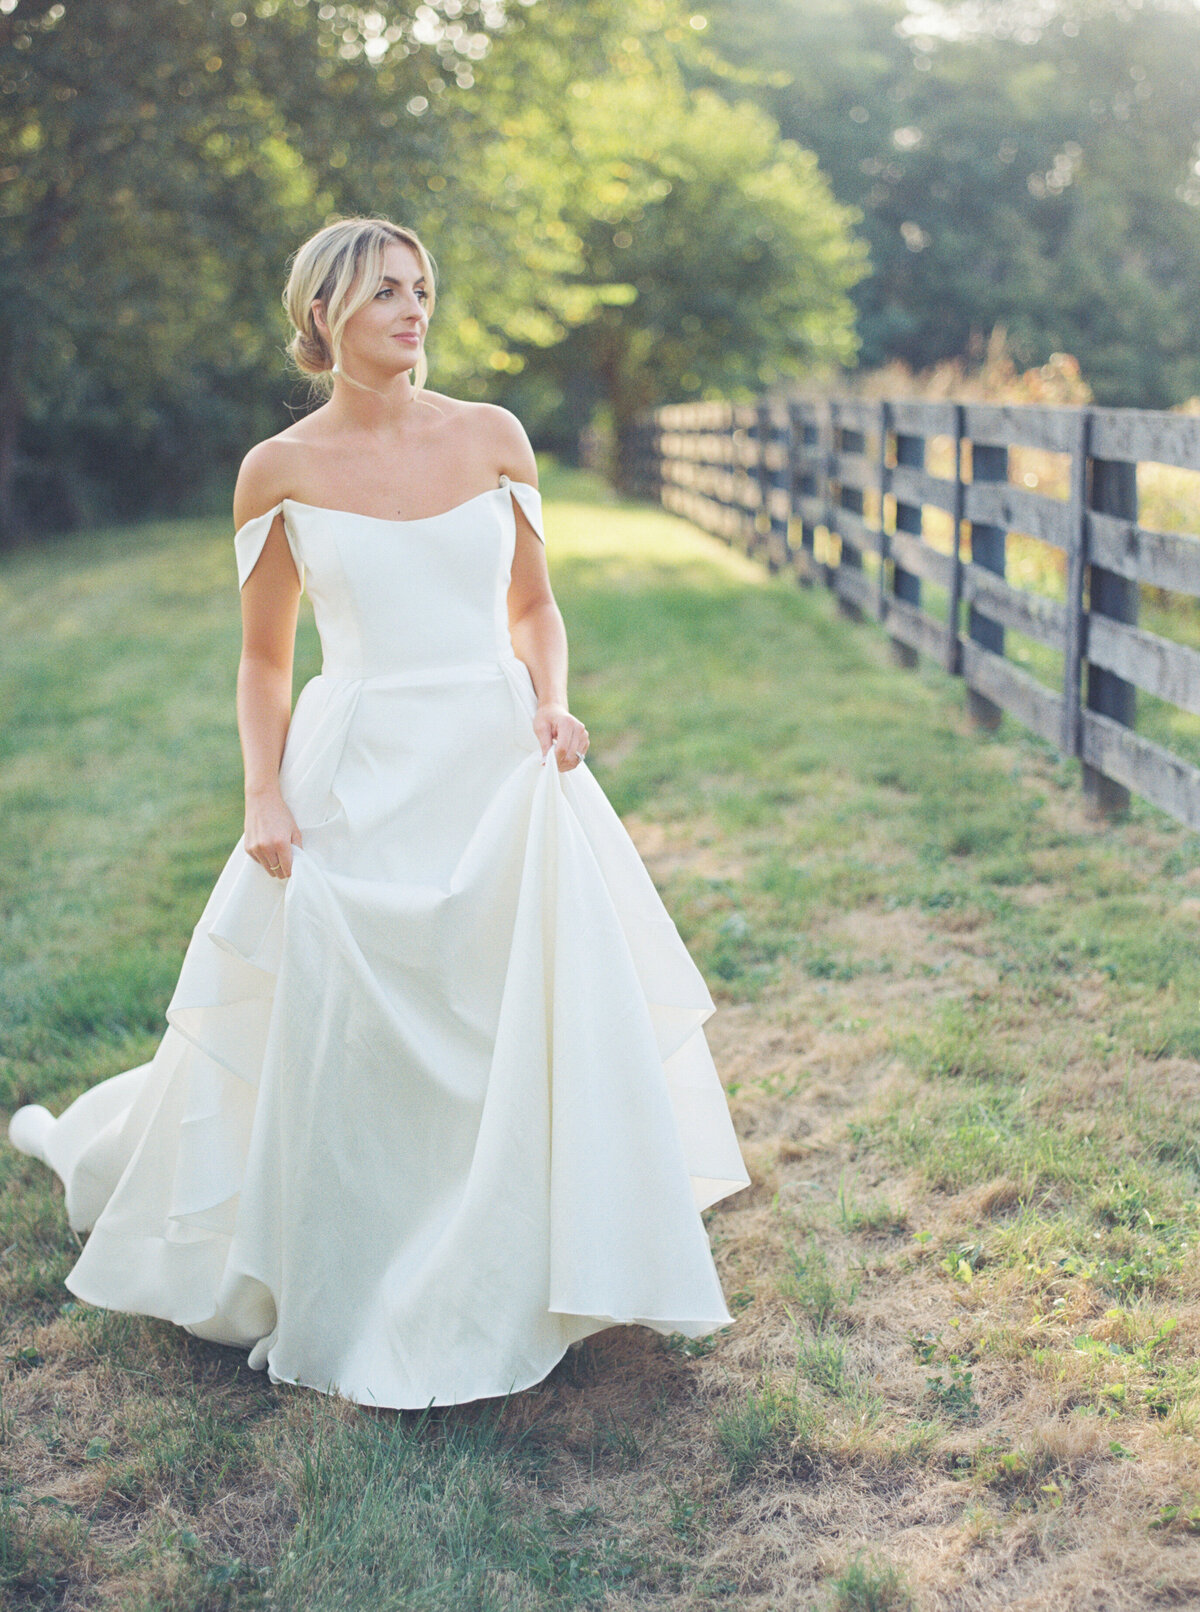 Kentucky Wedding Fall Bride and Groom Burman Photography-21